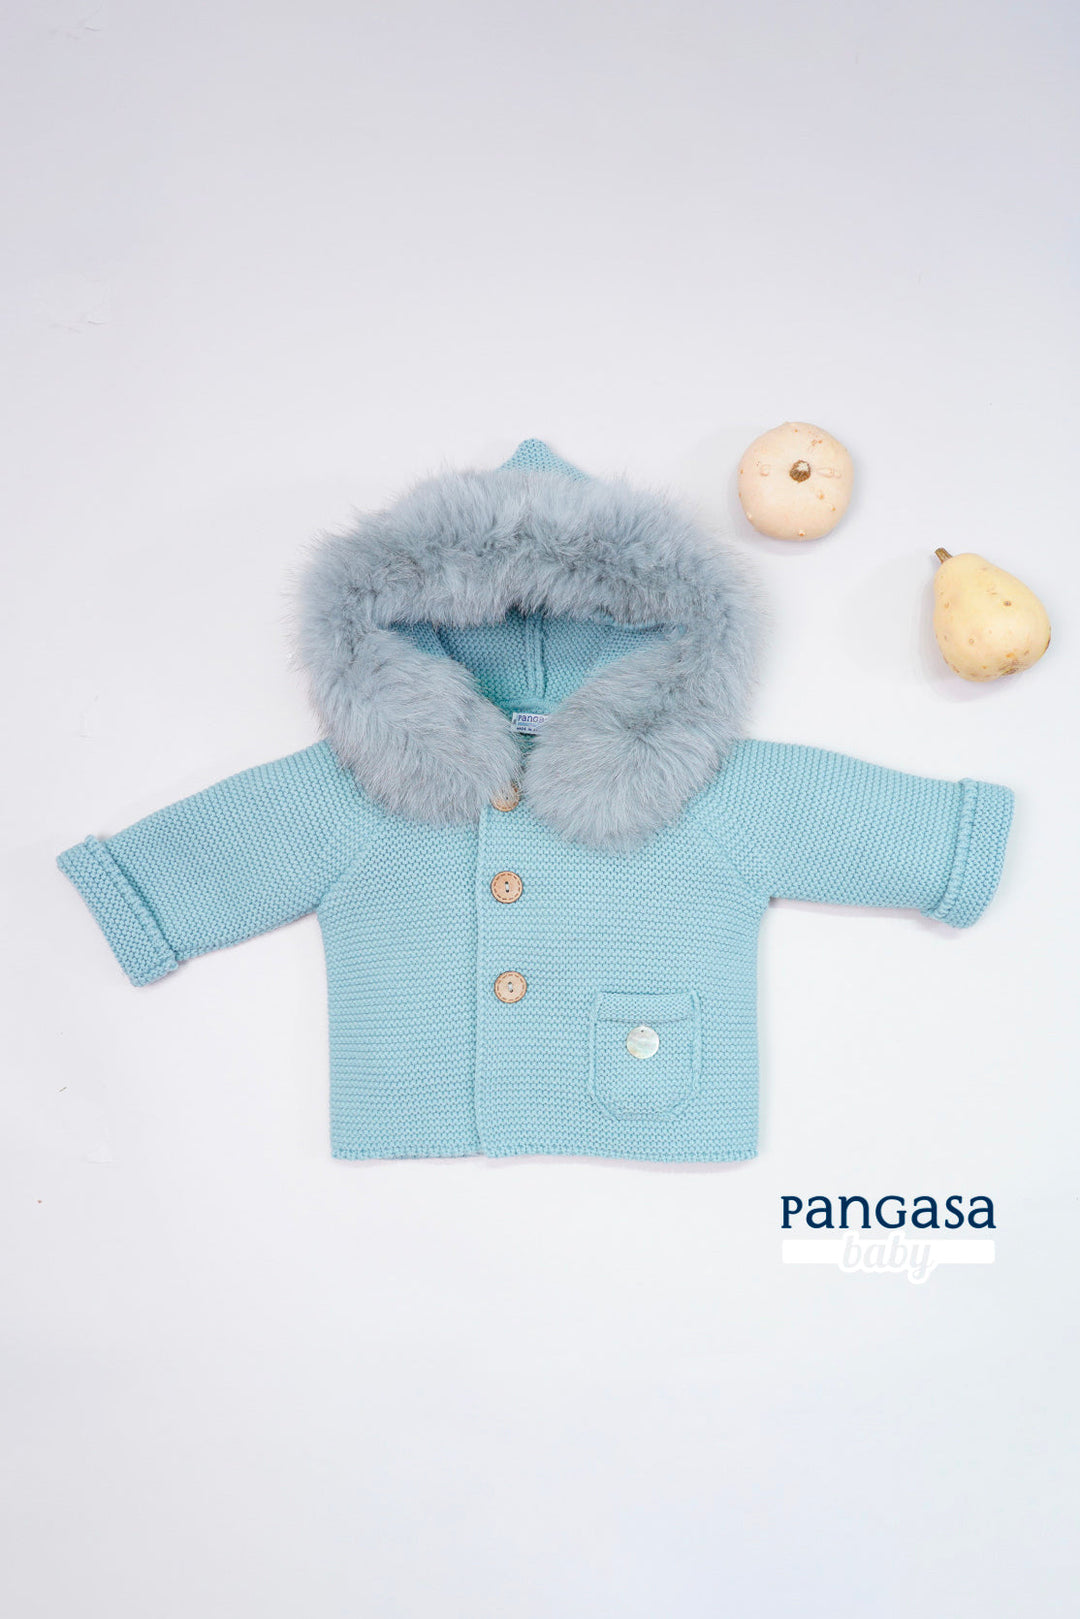 Pangasa PREORDER Sea Green Faux Fur Knitted Jacket | iphoneandroidapplications